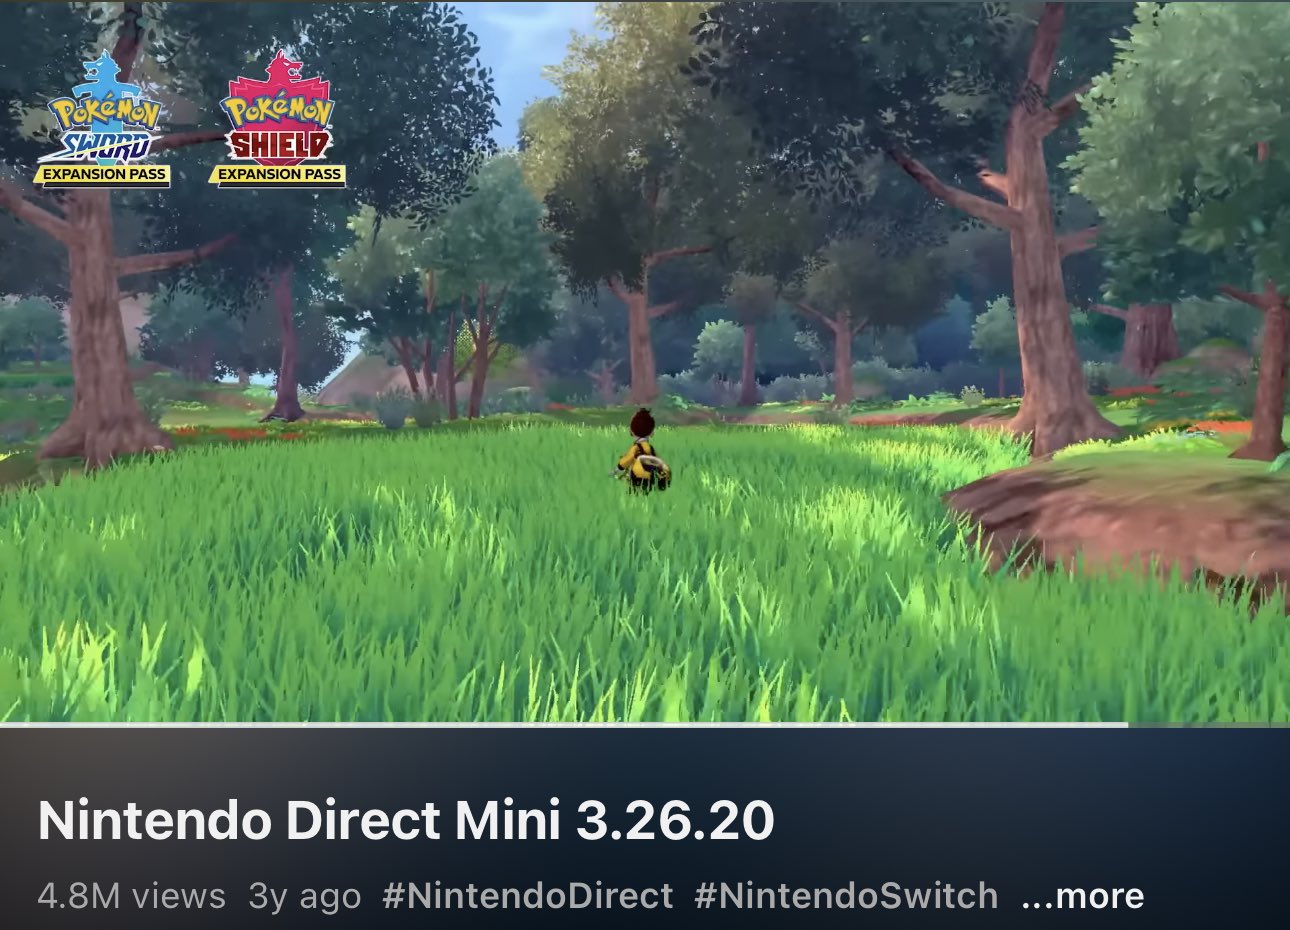 Pokémon Sword Expansion Pass and Pokémon Shield Expansion Pass - Nintendo  Direct Mini 3.26.20 